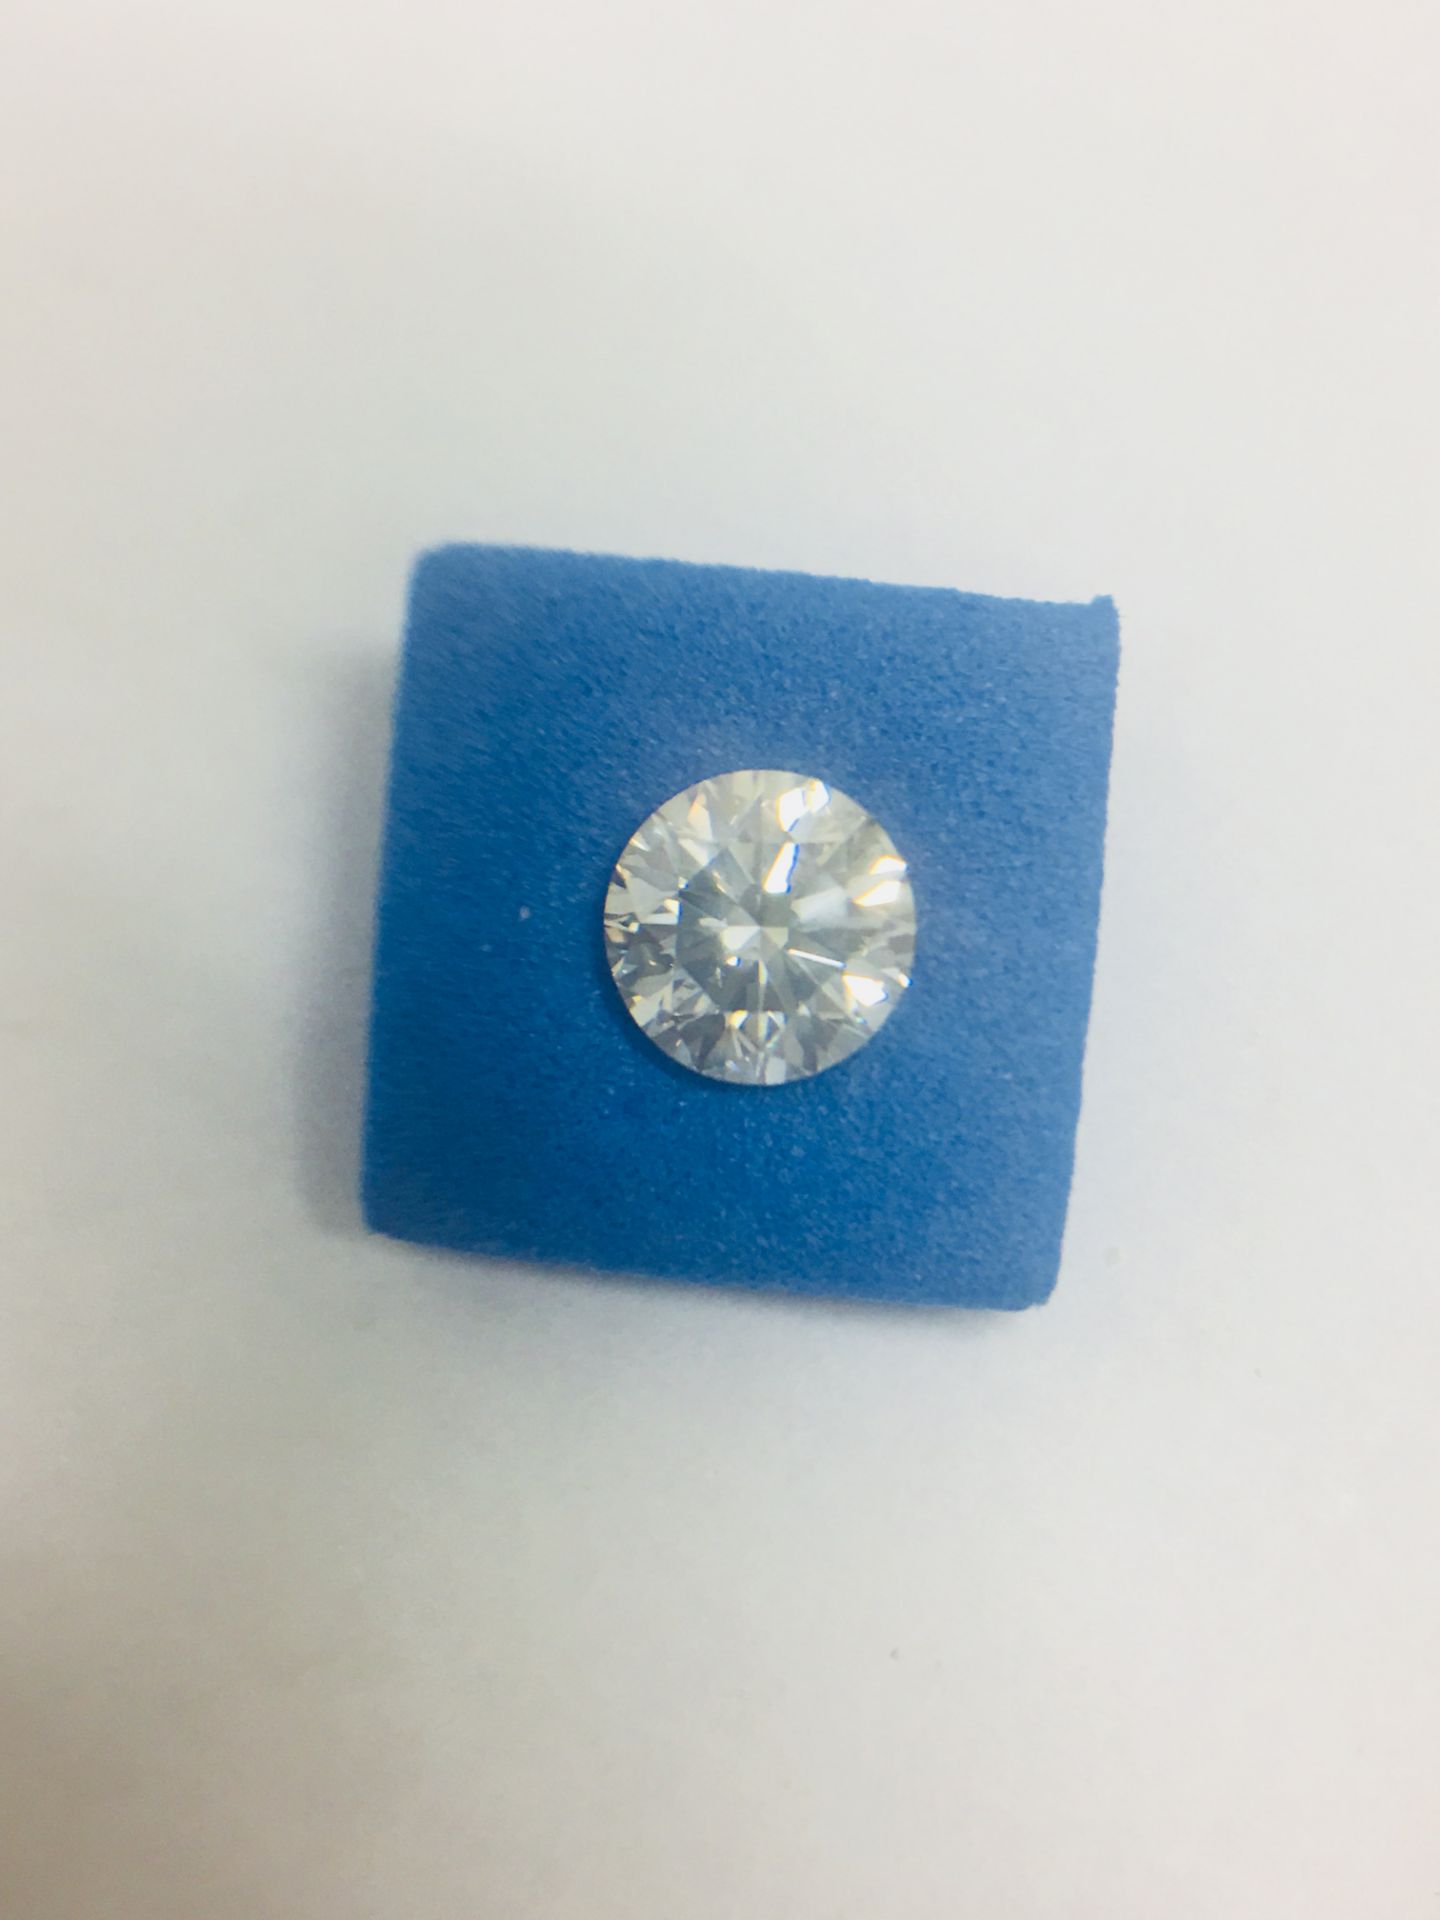 1.14ct round brilliant cut diamond natural untreated